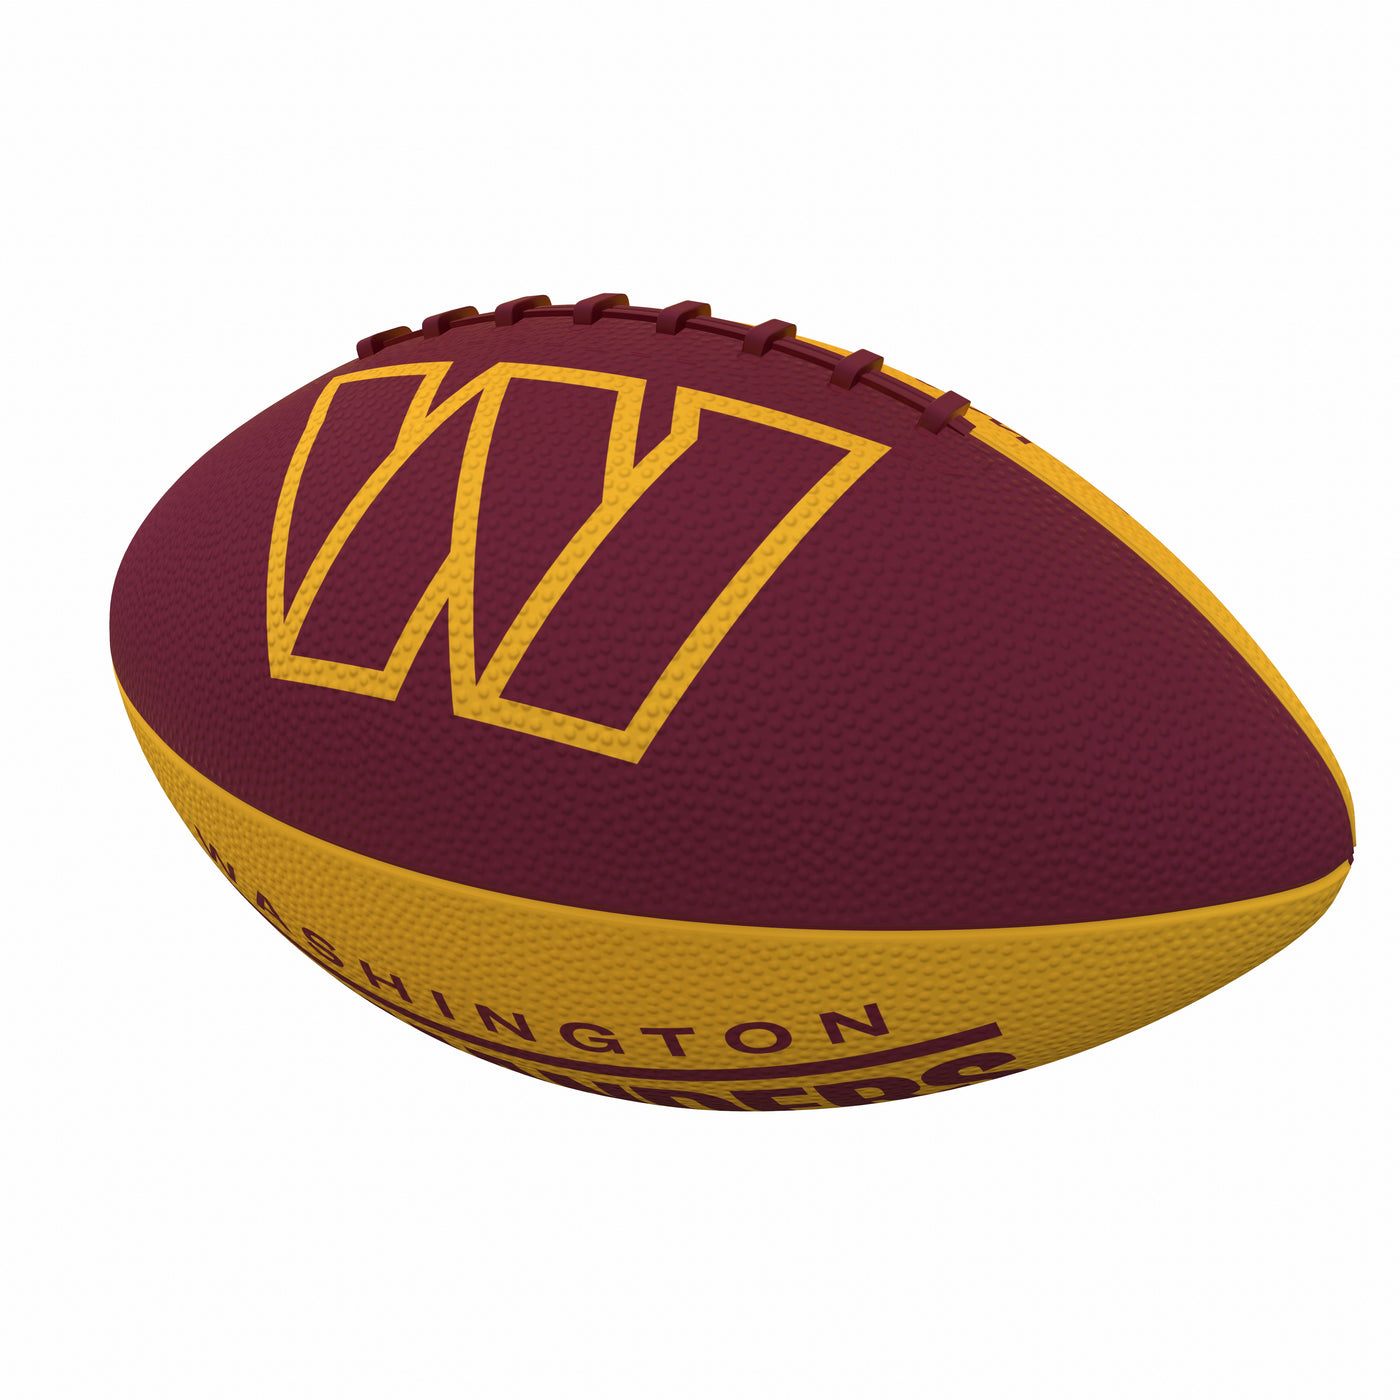 Washington Commanders Pinwheel Logo Junior-Size Rubber Football